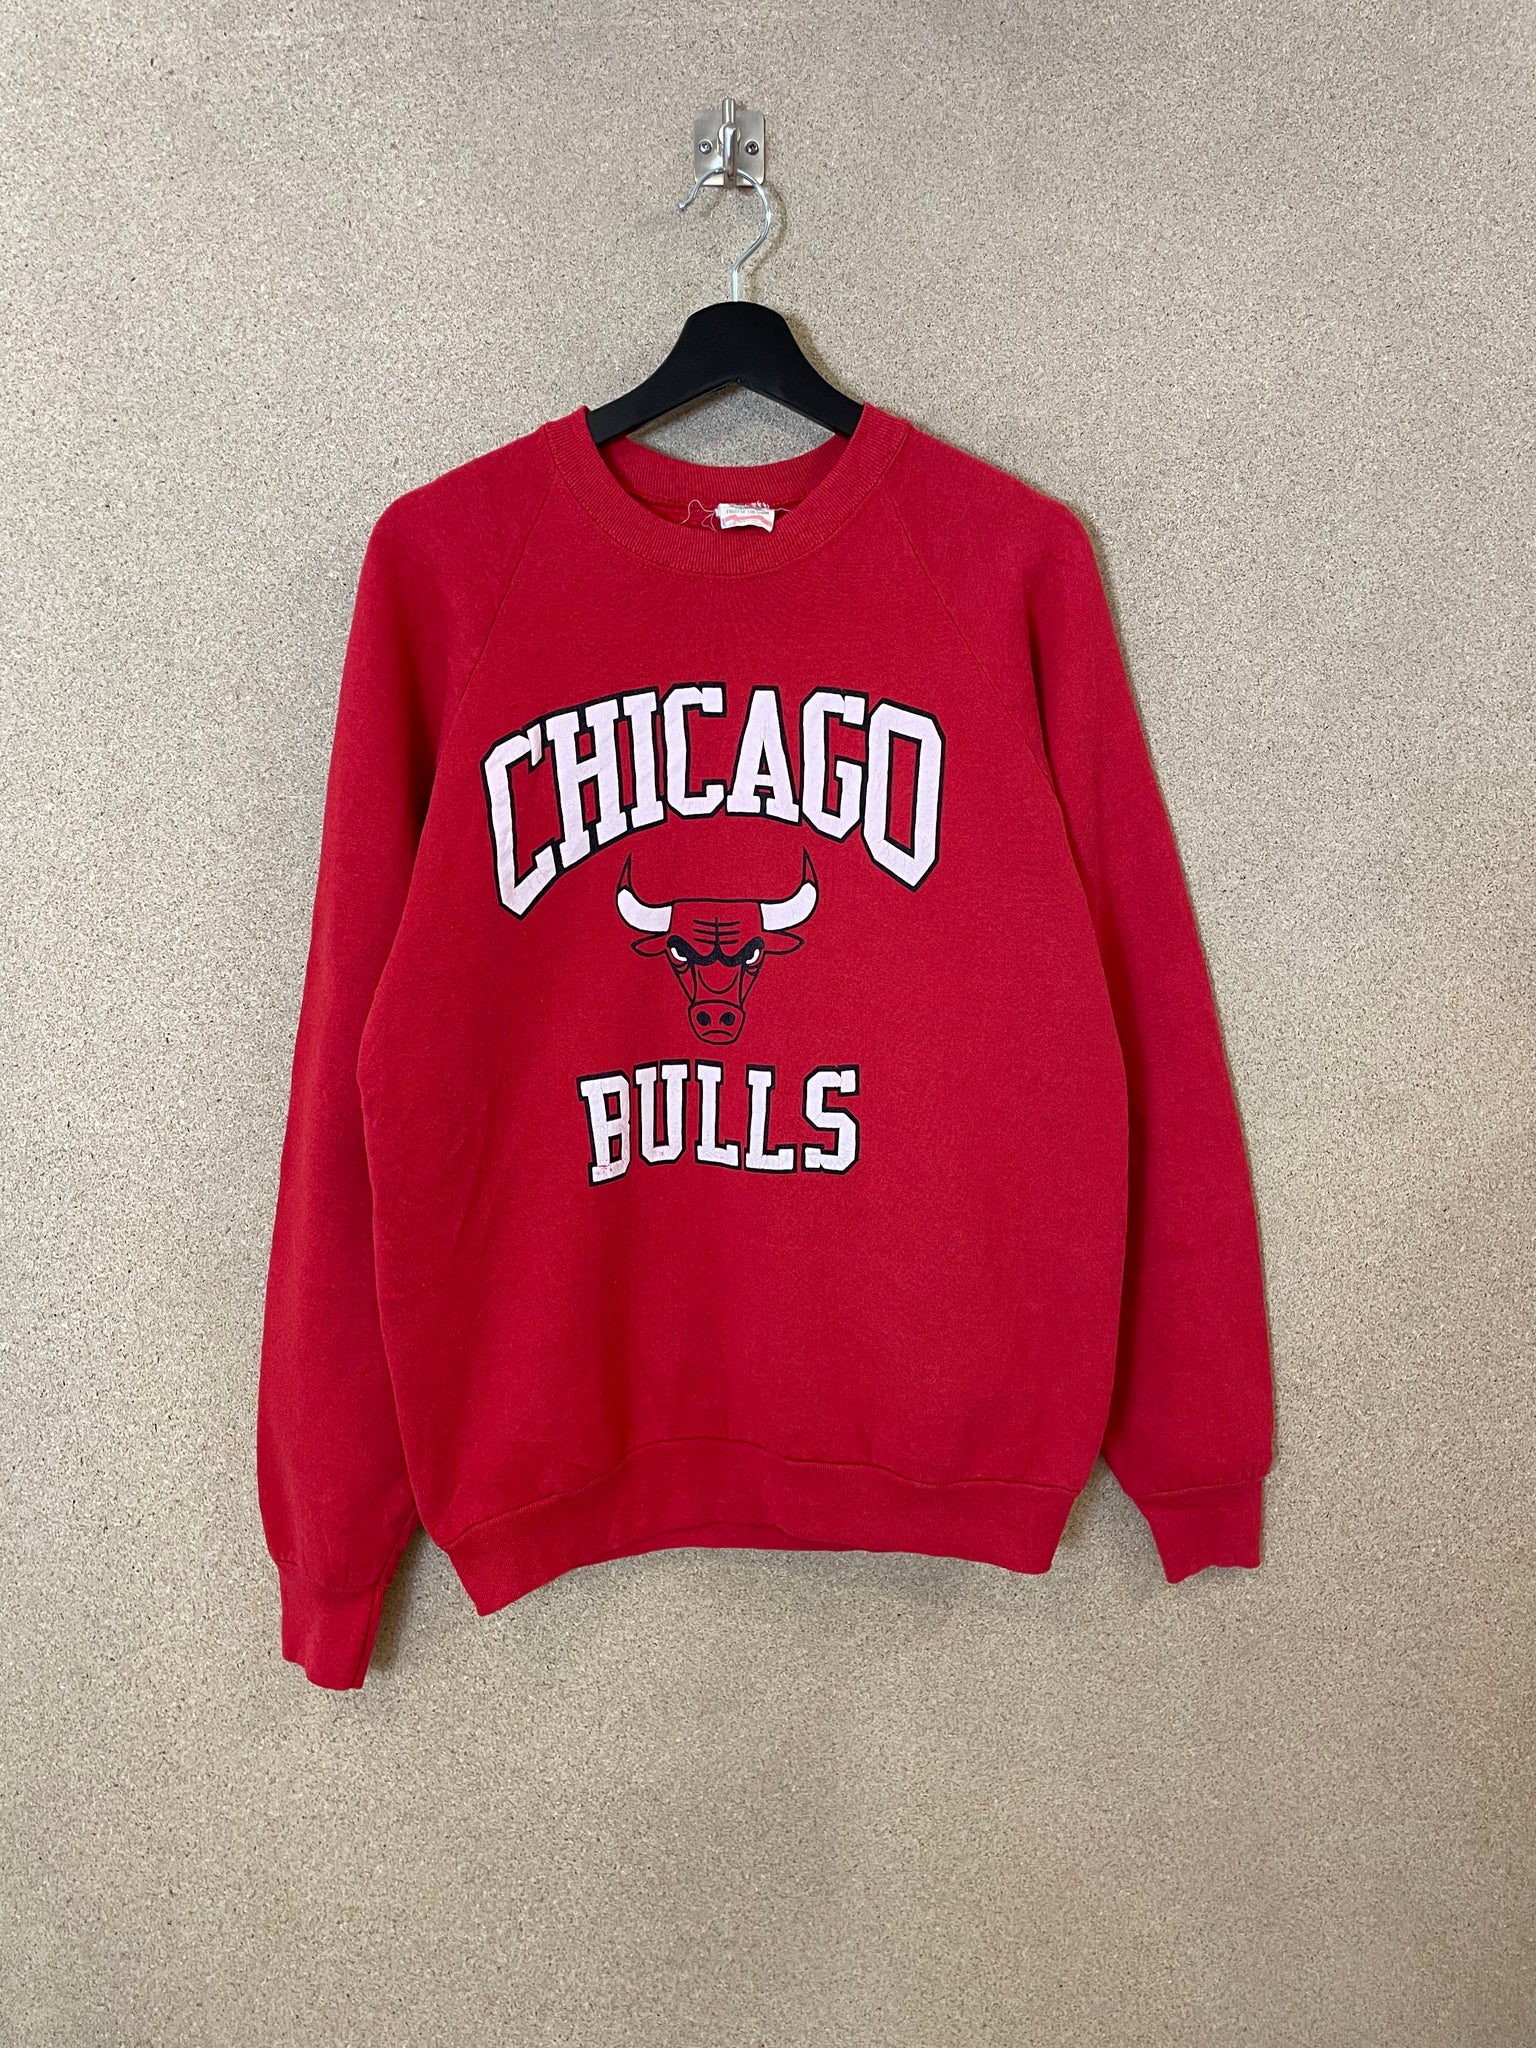 Vintage Chicago Bulls NBA 90s Sweatshirt - M